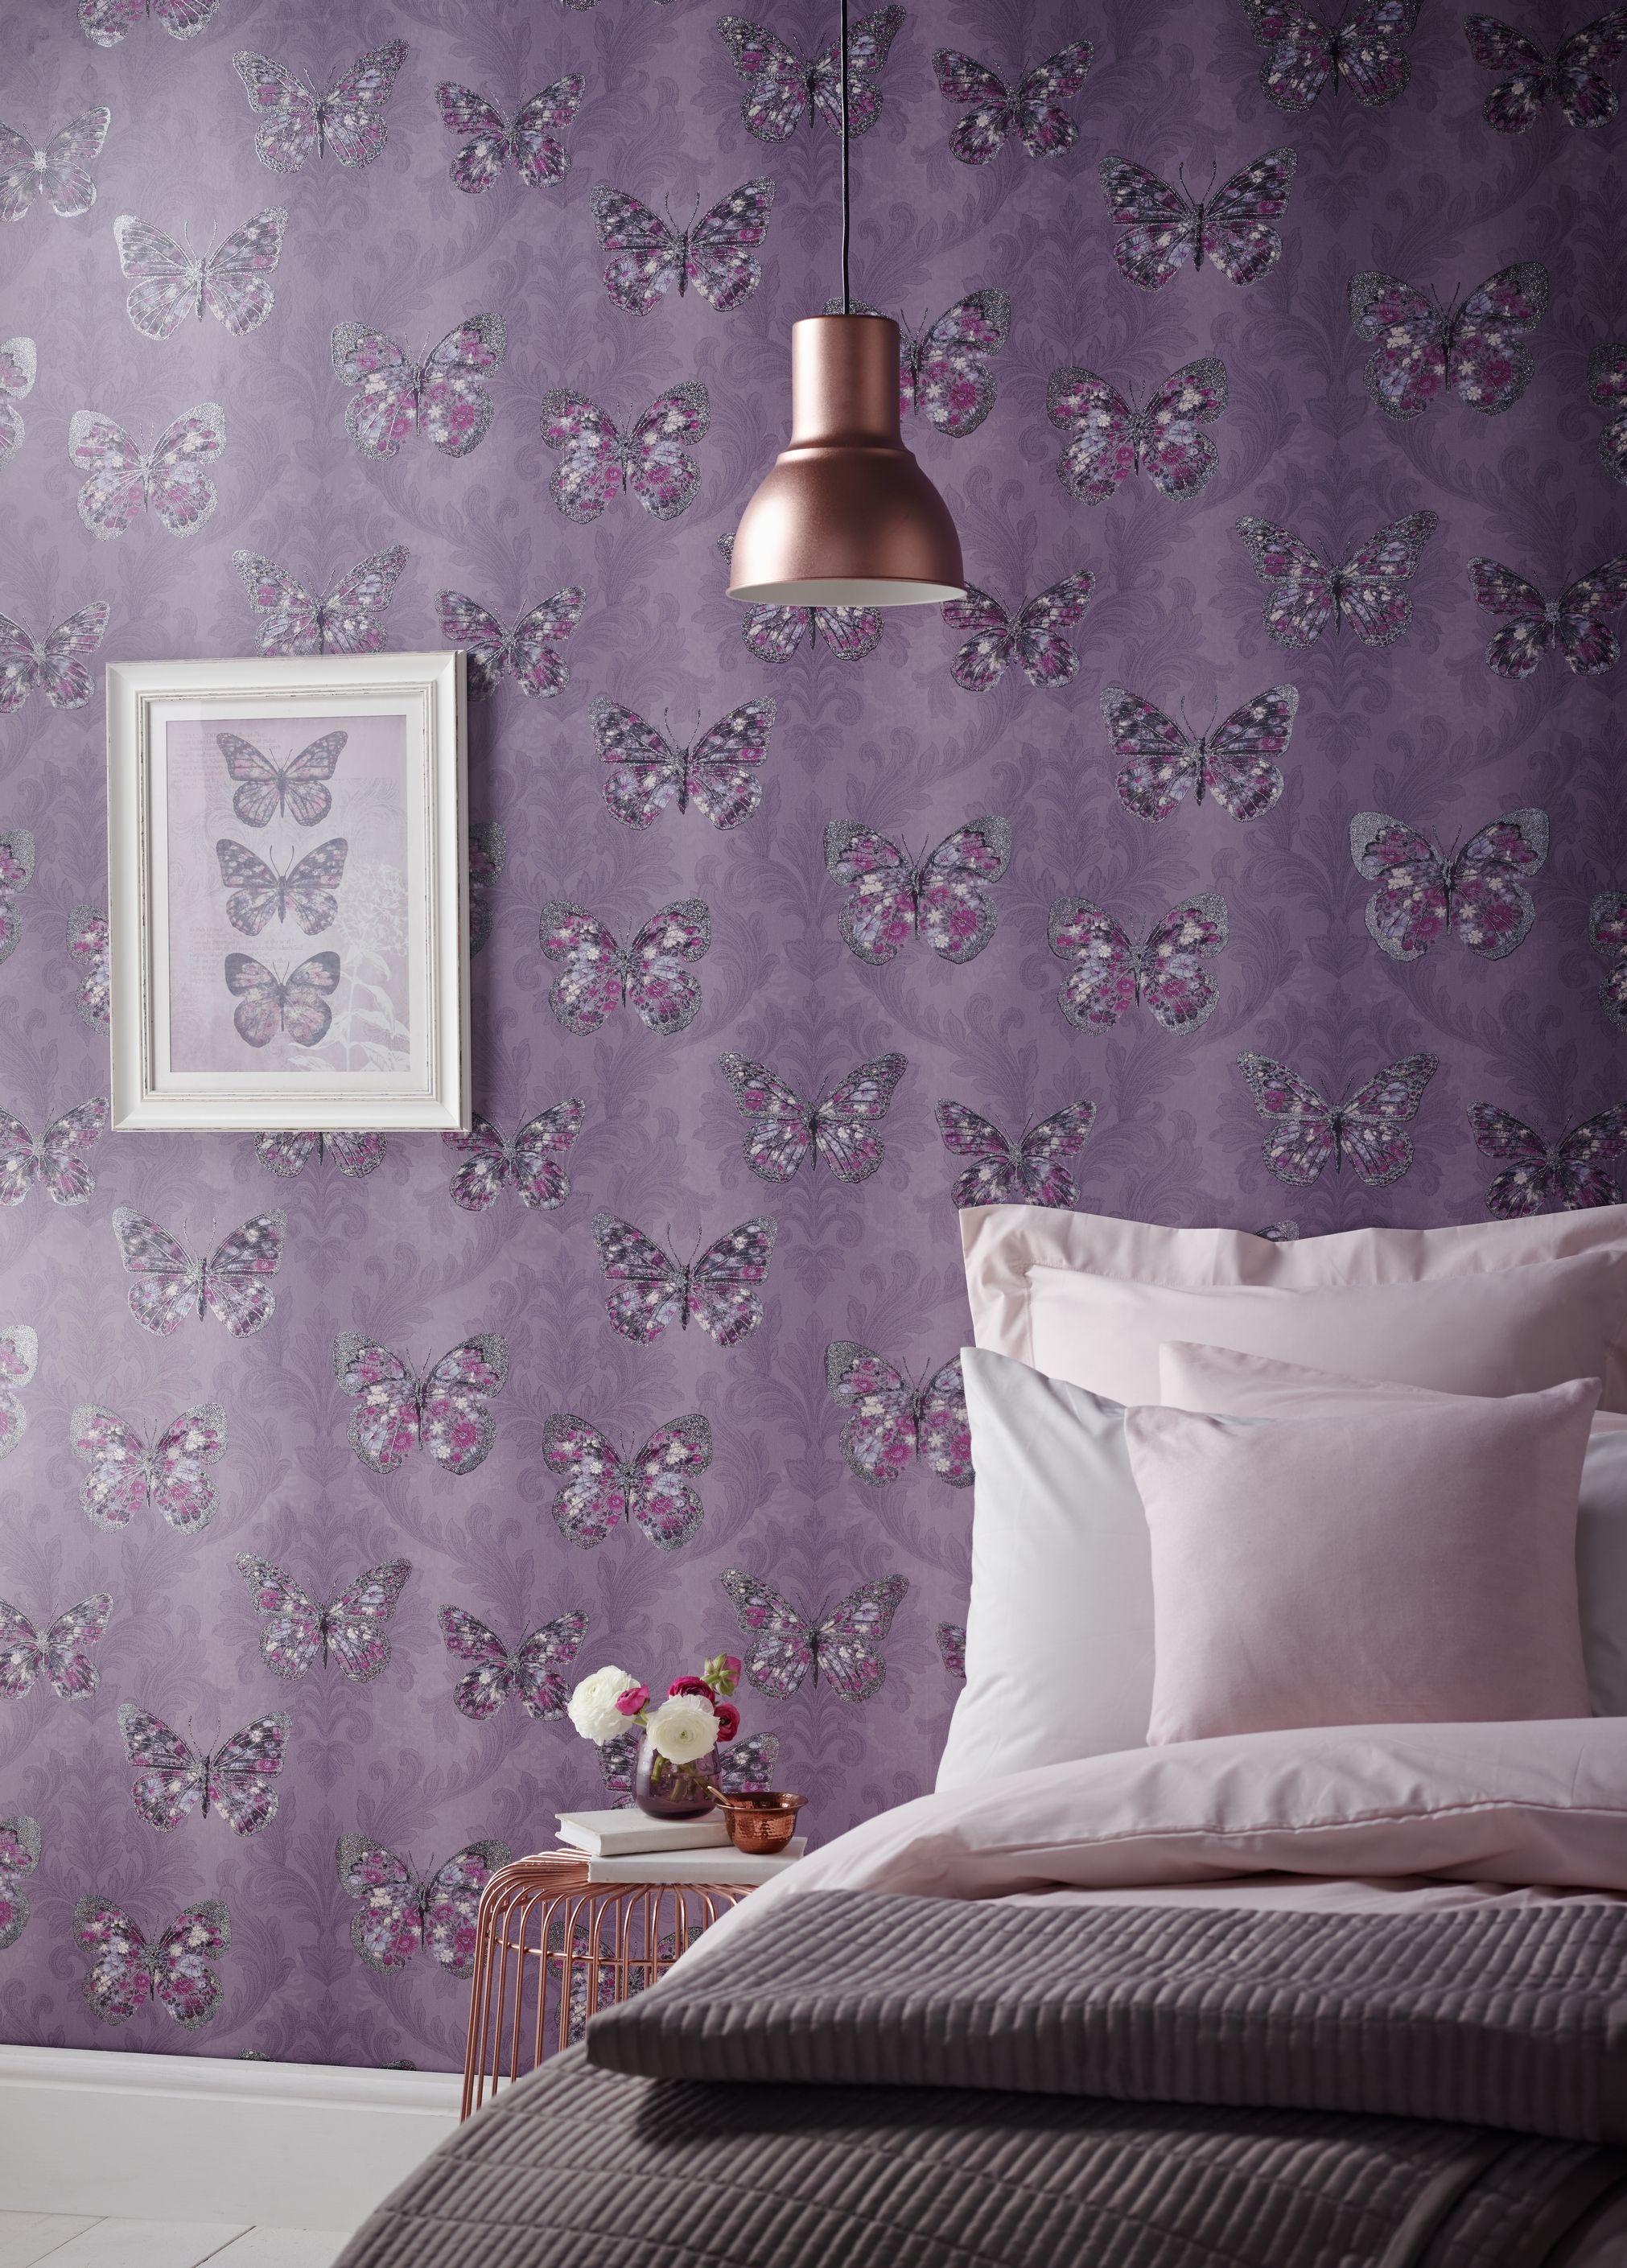 2022 x 2819 · jpeg - 10 Stylish Purple Wallpapers Wallpaper Design Ideas